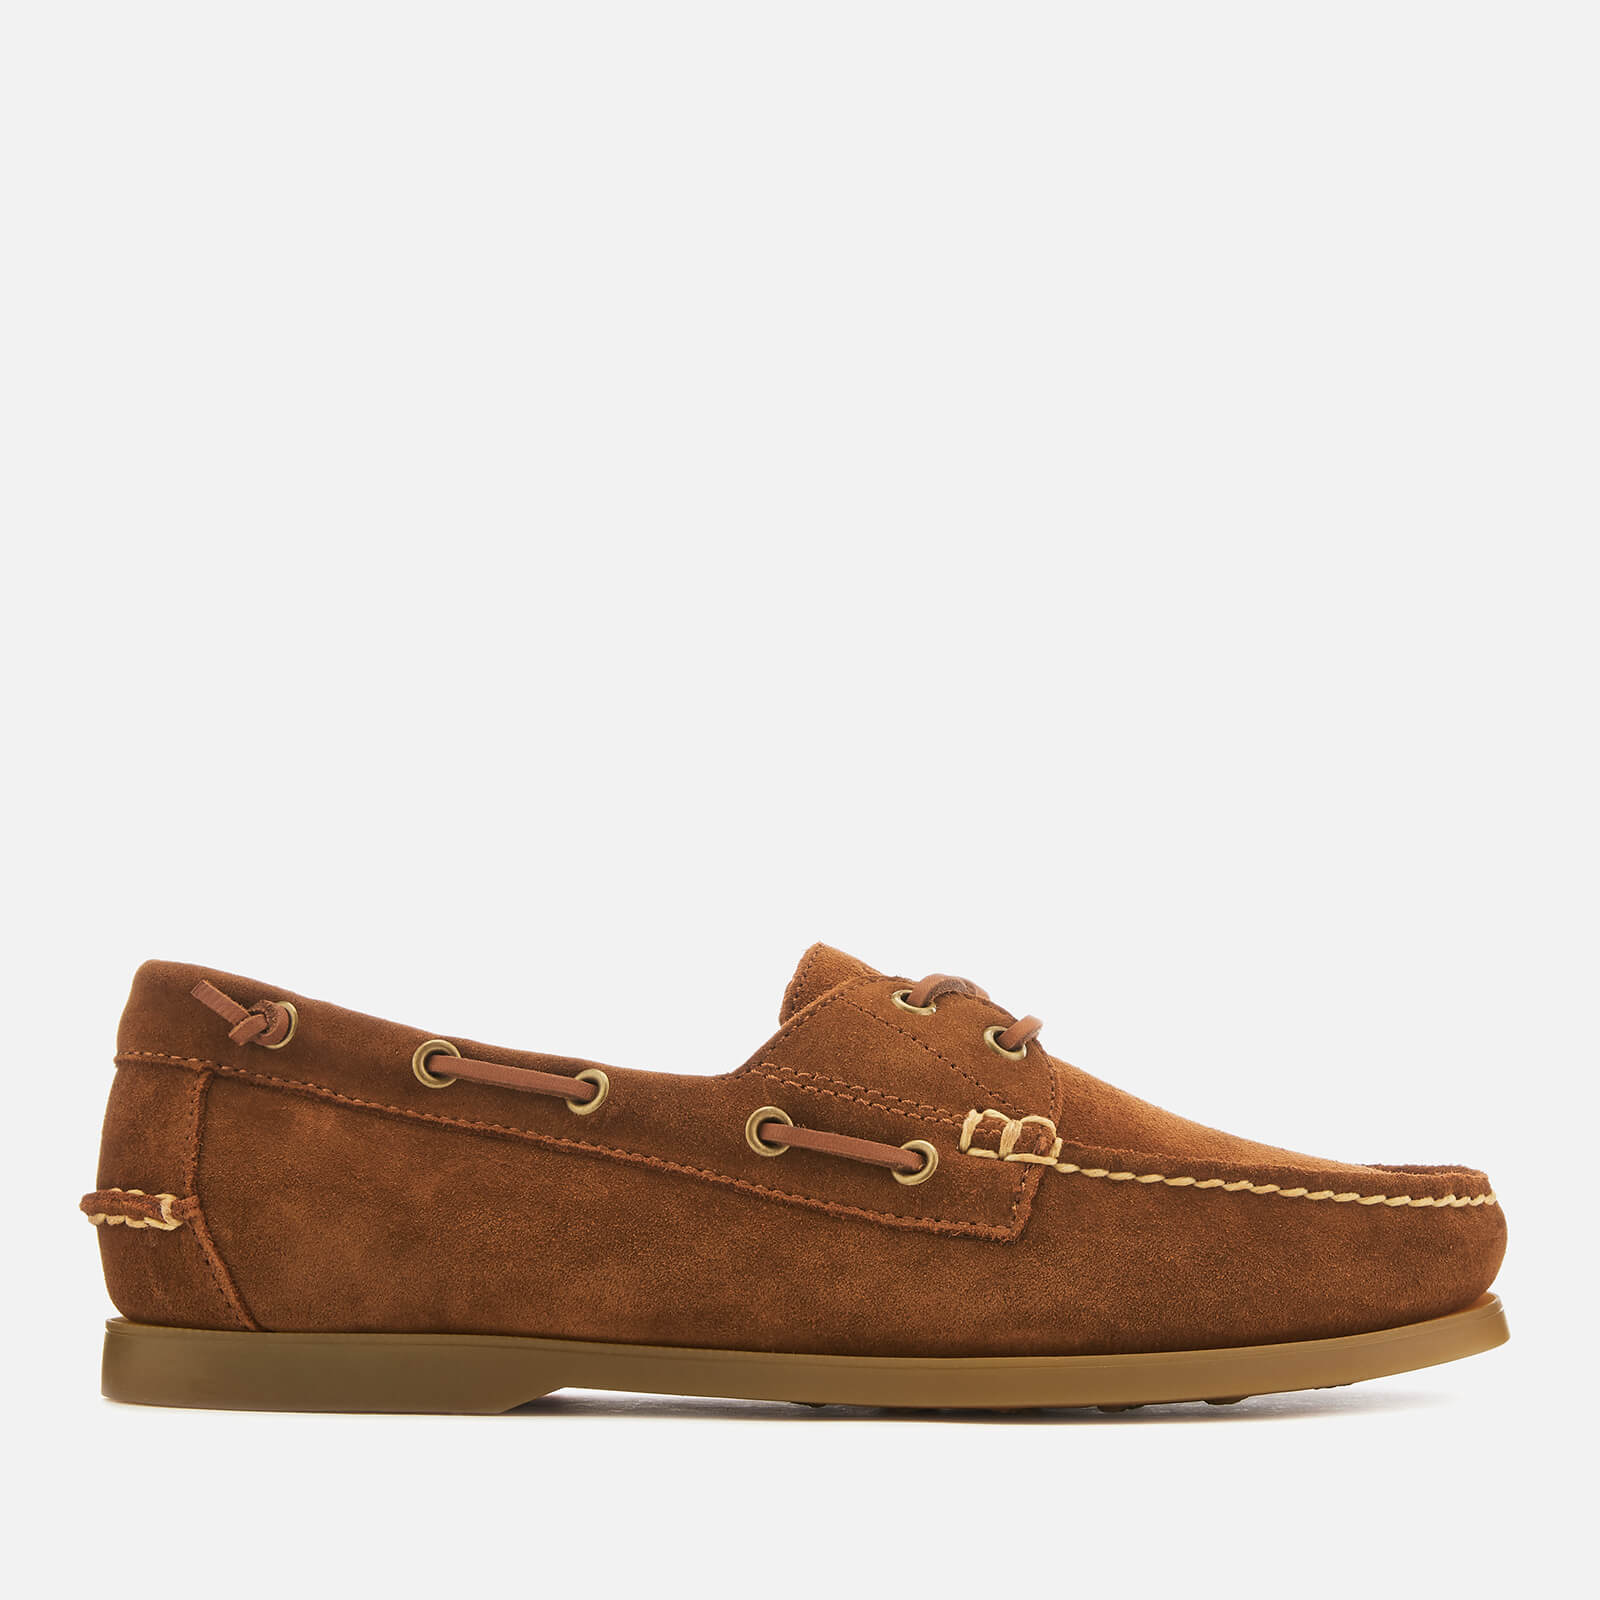 Polo Ralph Lauren Men’s Merton Suede Boat Shoes - New Snuff